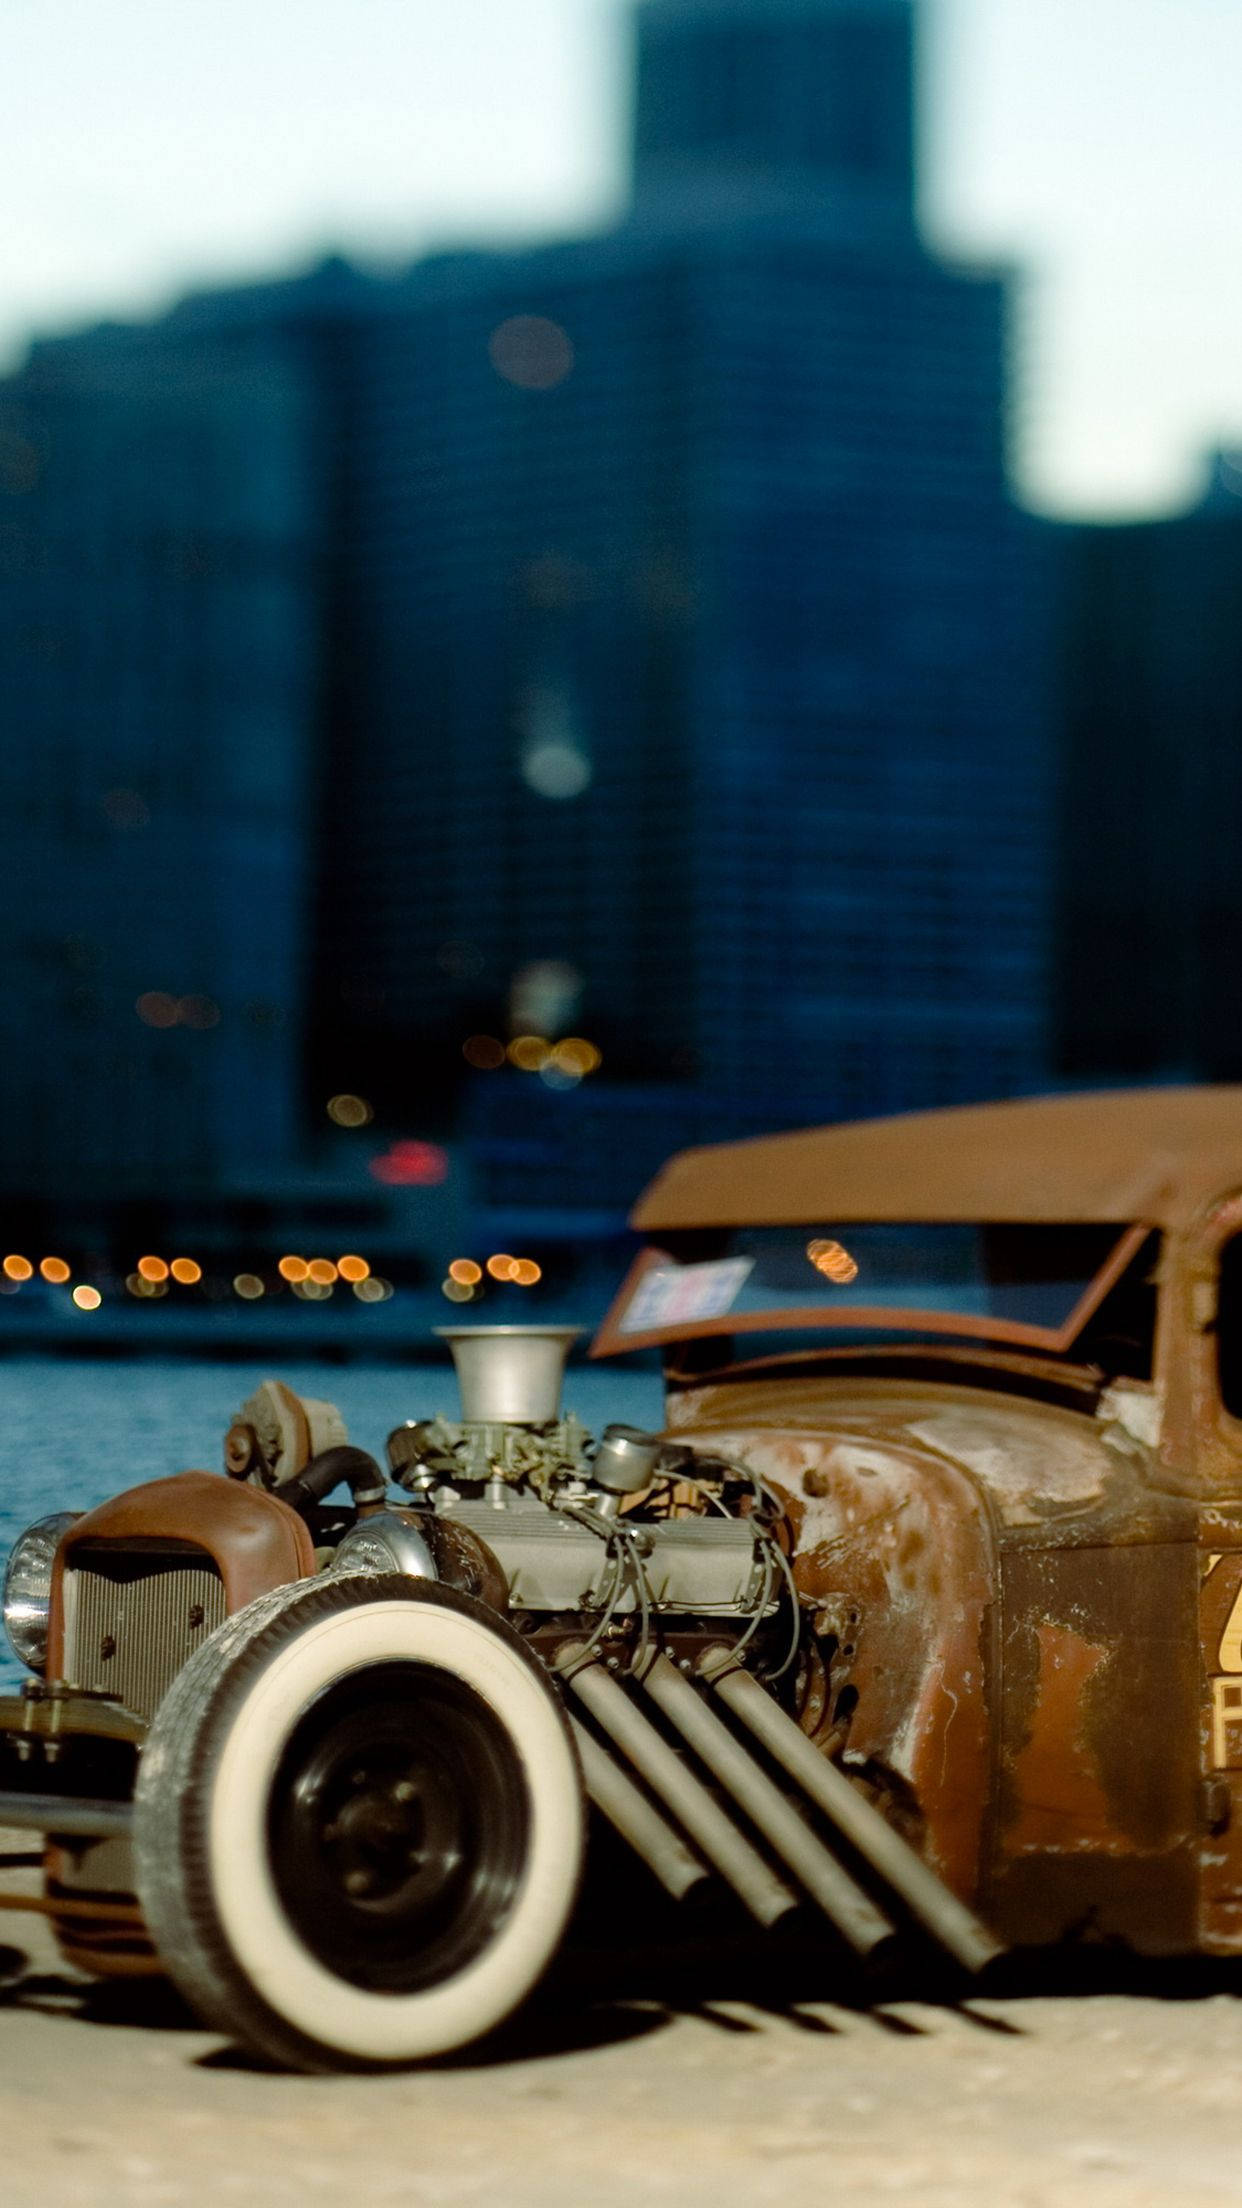 Caption: Vintage Rat Rod Car In City Sunset